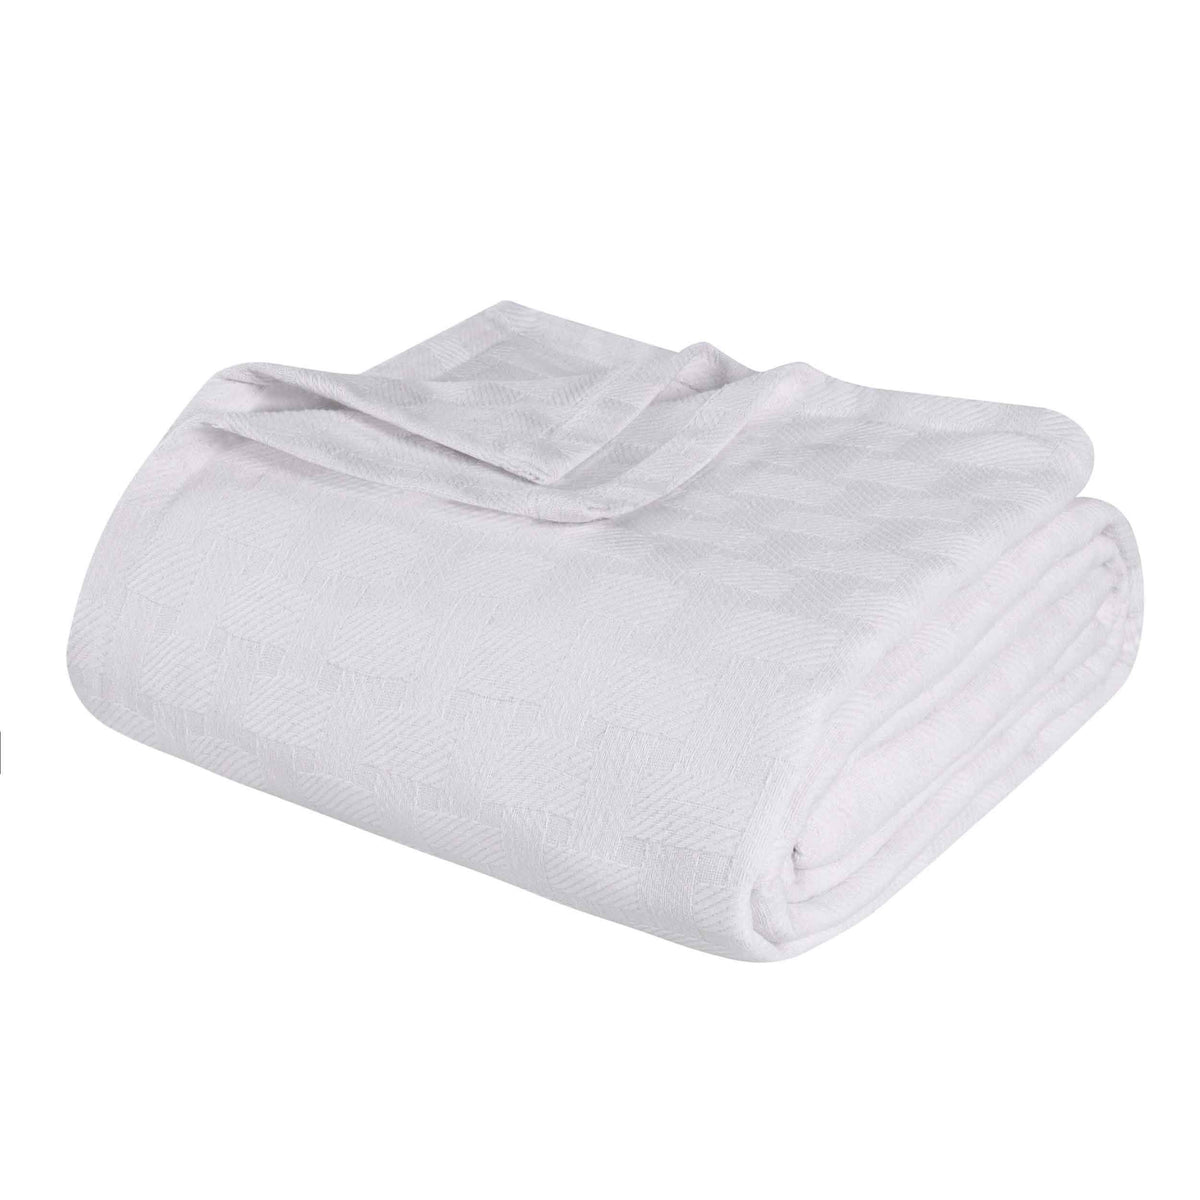 Basketweave All Season Cotton Blanket - White